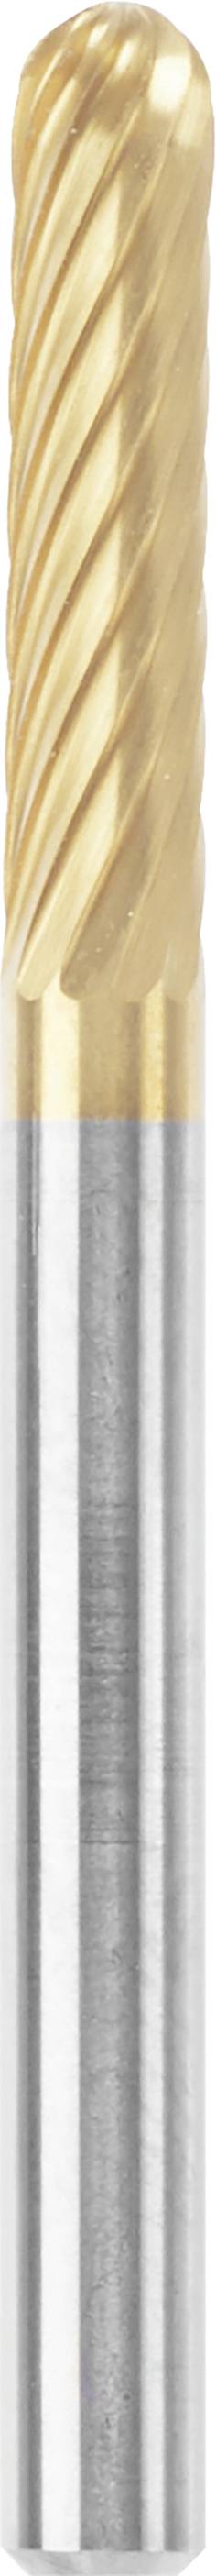 DREMEL 26159903DM Fräser Stahl 3.2 mm Länge 39 mm Arbeits-Länge 3 mm 1 Stück